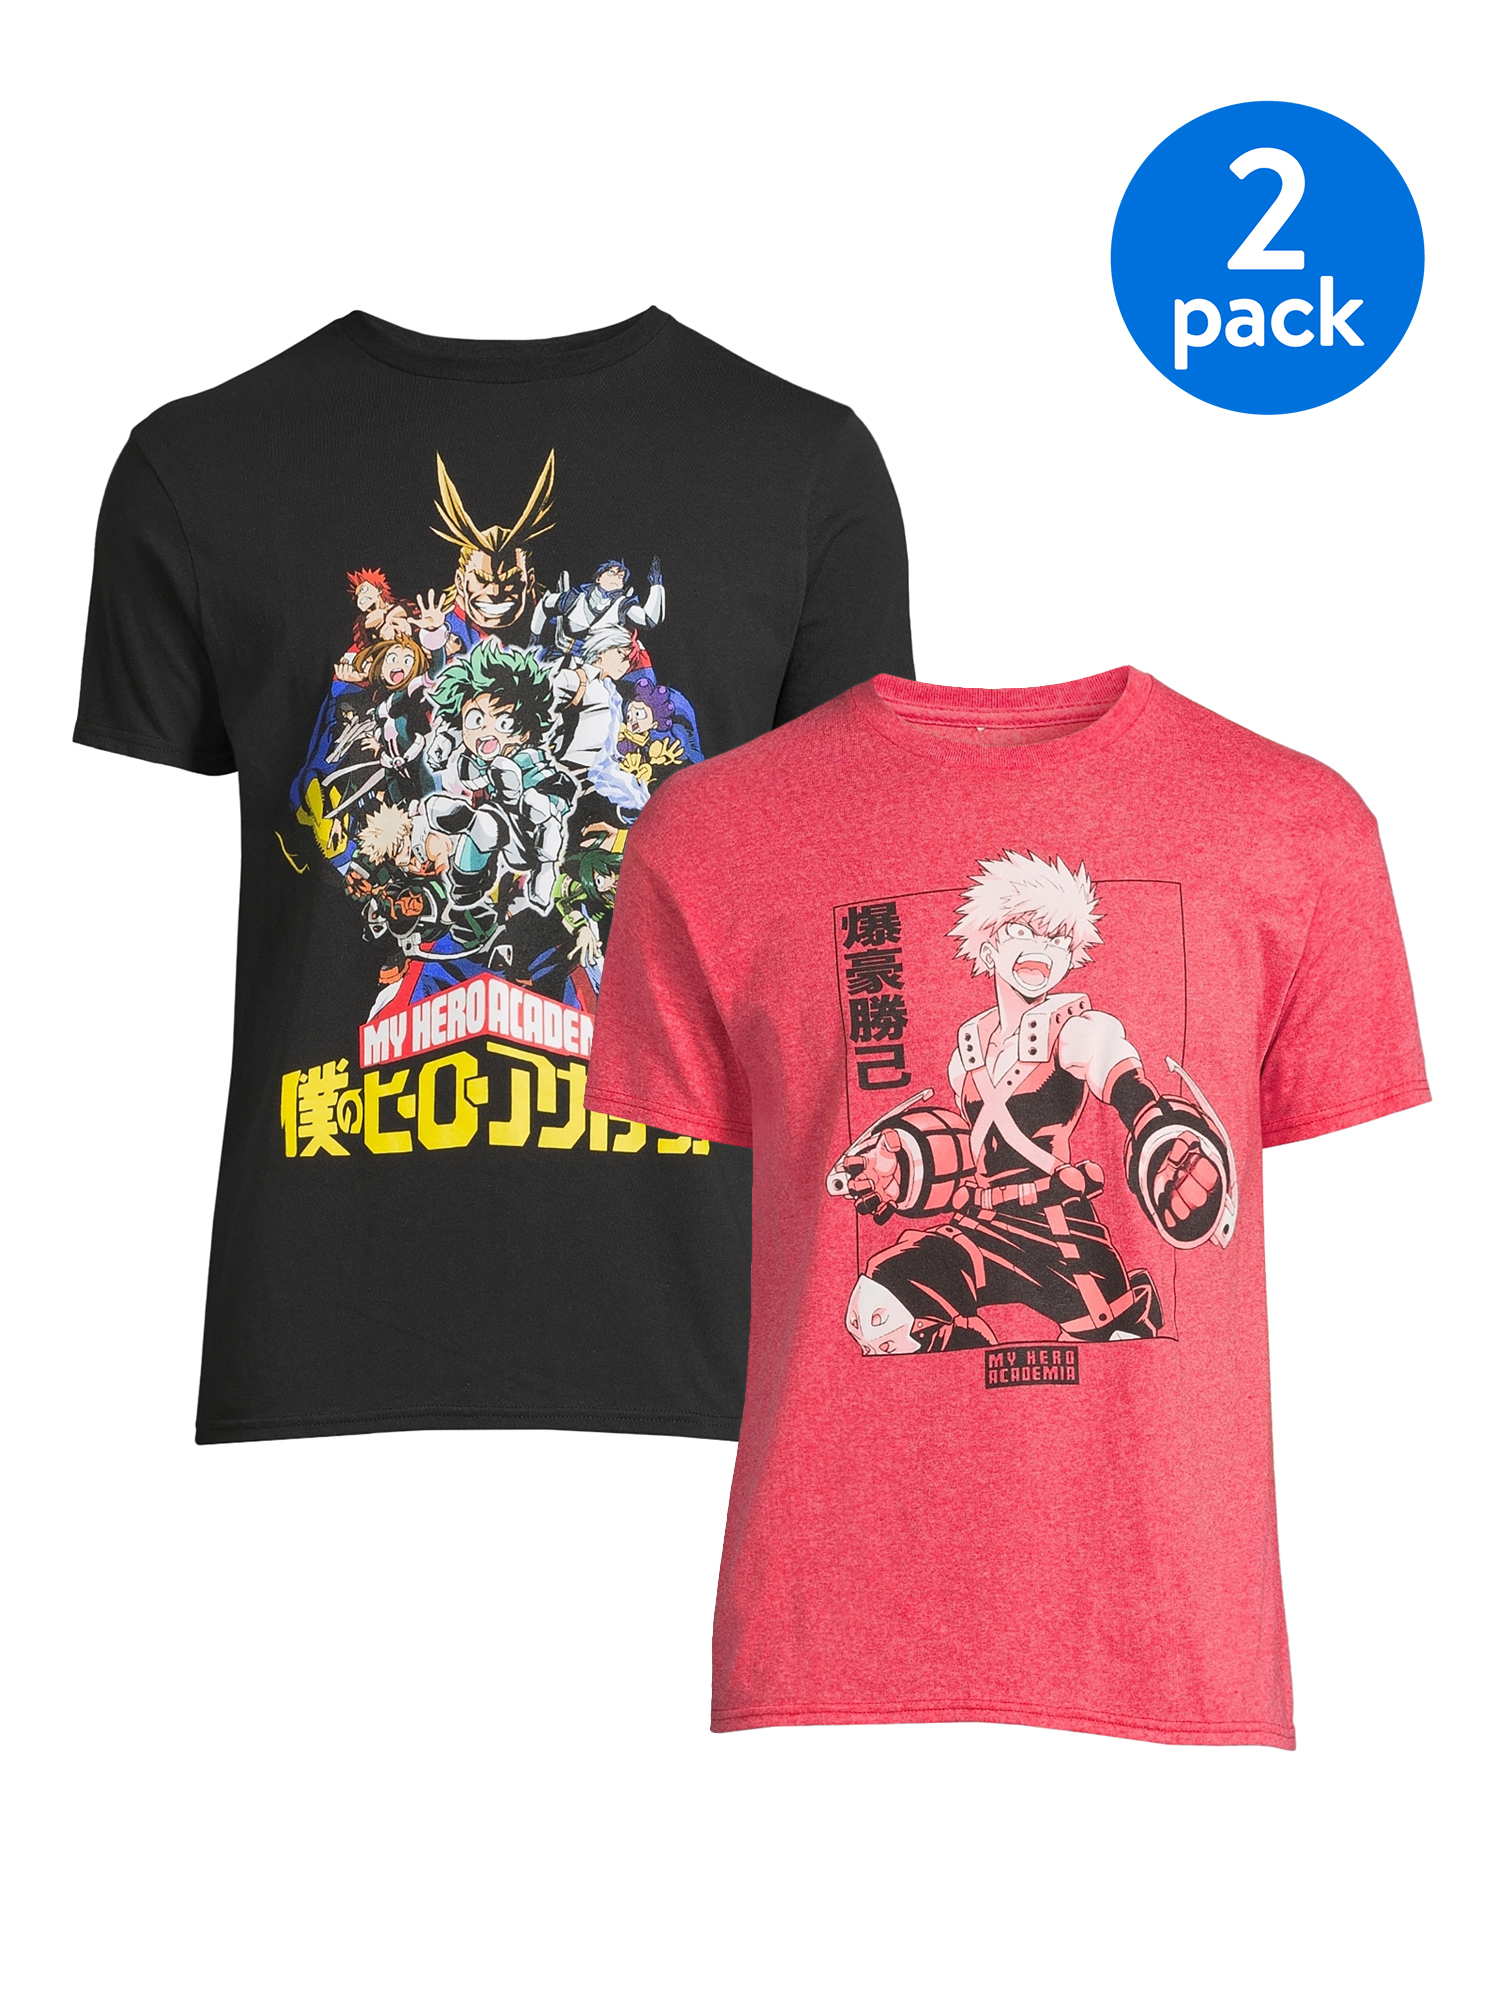 My Hero Academia Men's & Big Men's Anime Graphic Tees Shirts, 2-Pack, Sizes S-3XL, My Hero Academia Mens T-Shirts - image 3 of 6